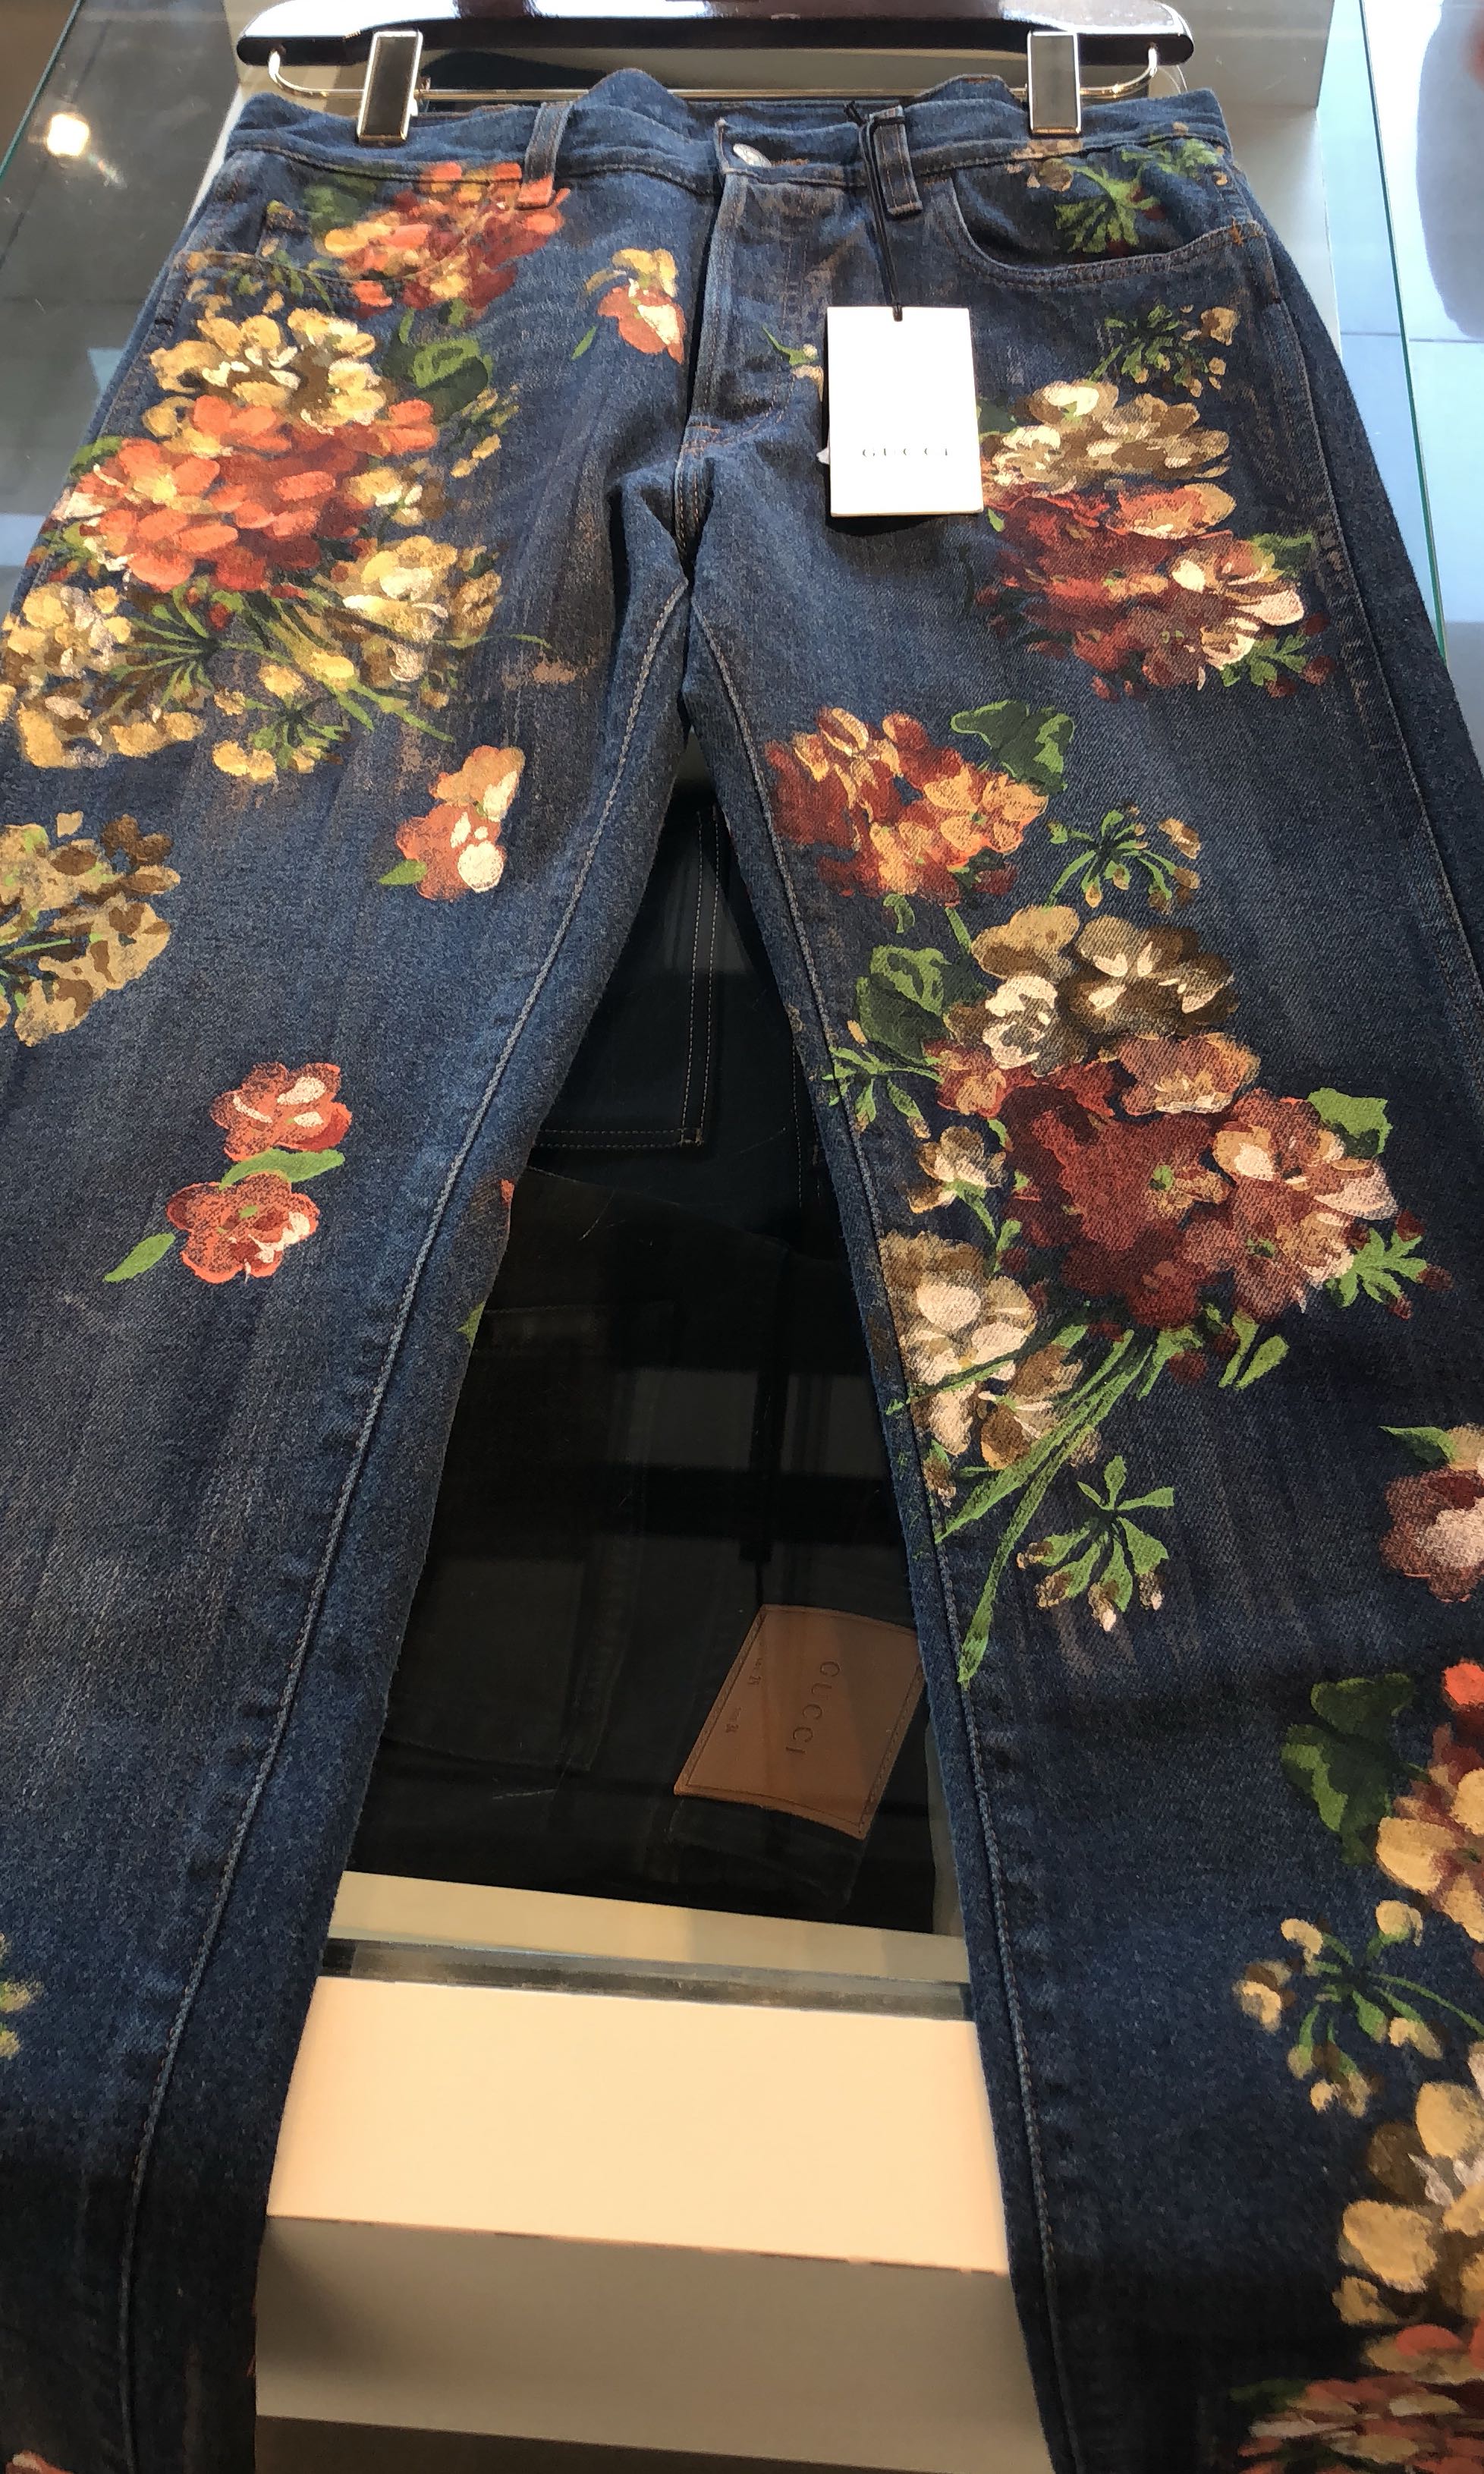 gucci flower jeans